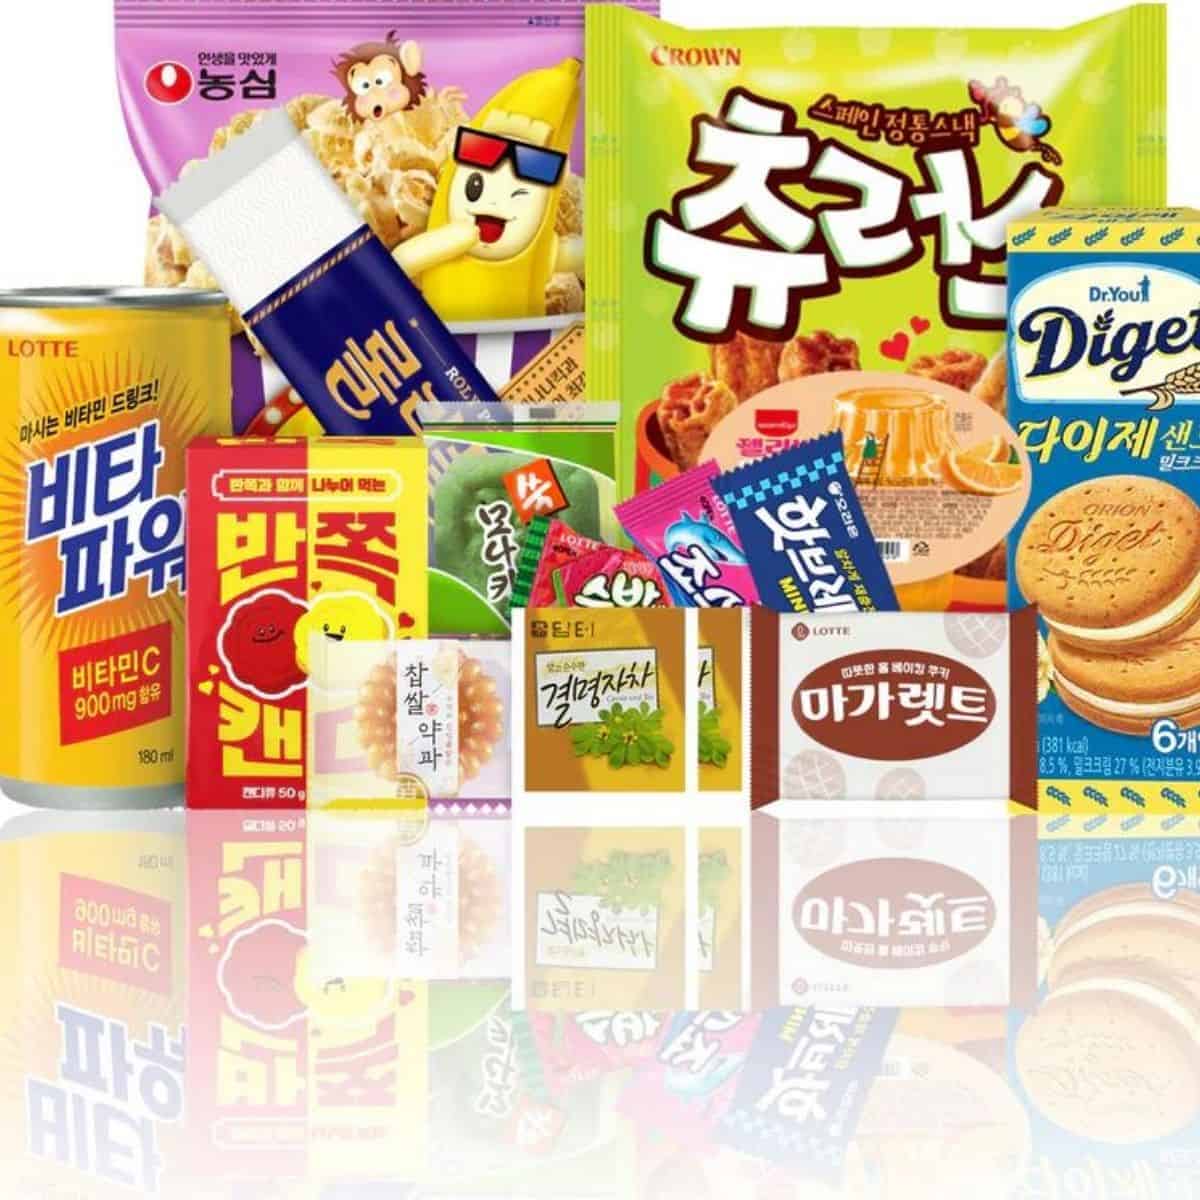 Premium selection of K-treats Korea Box